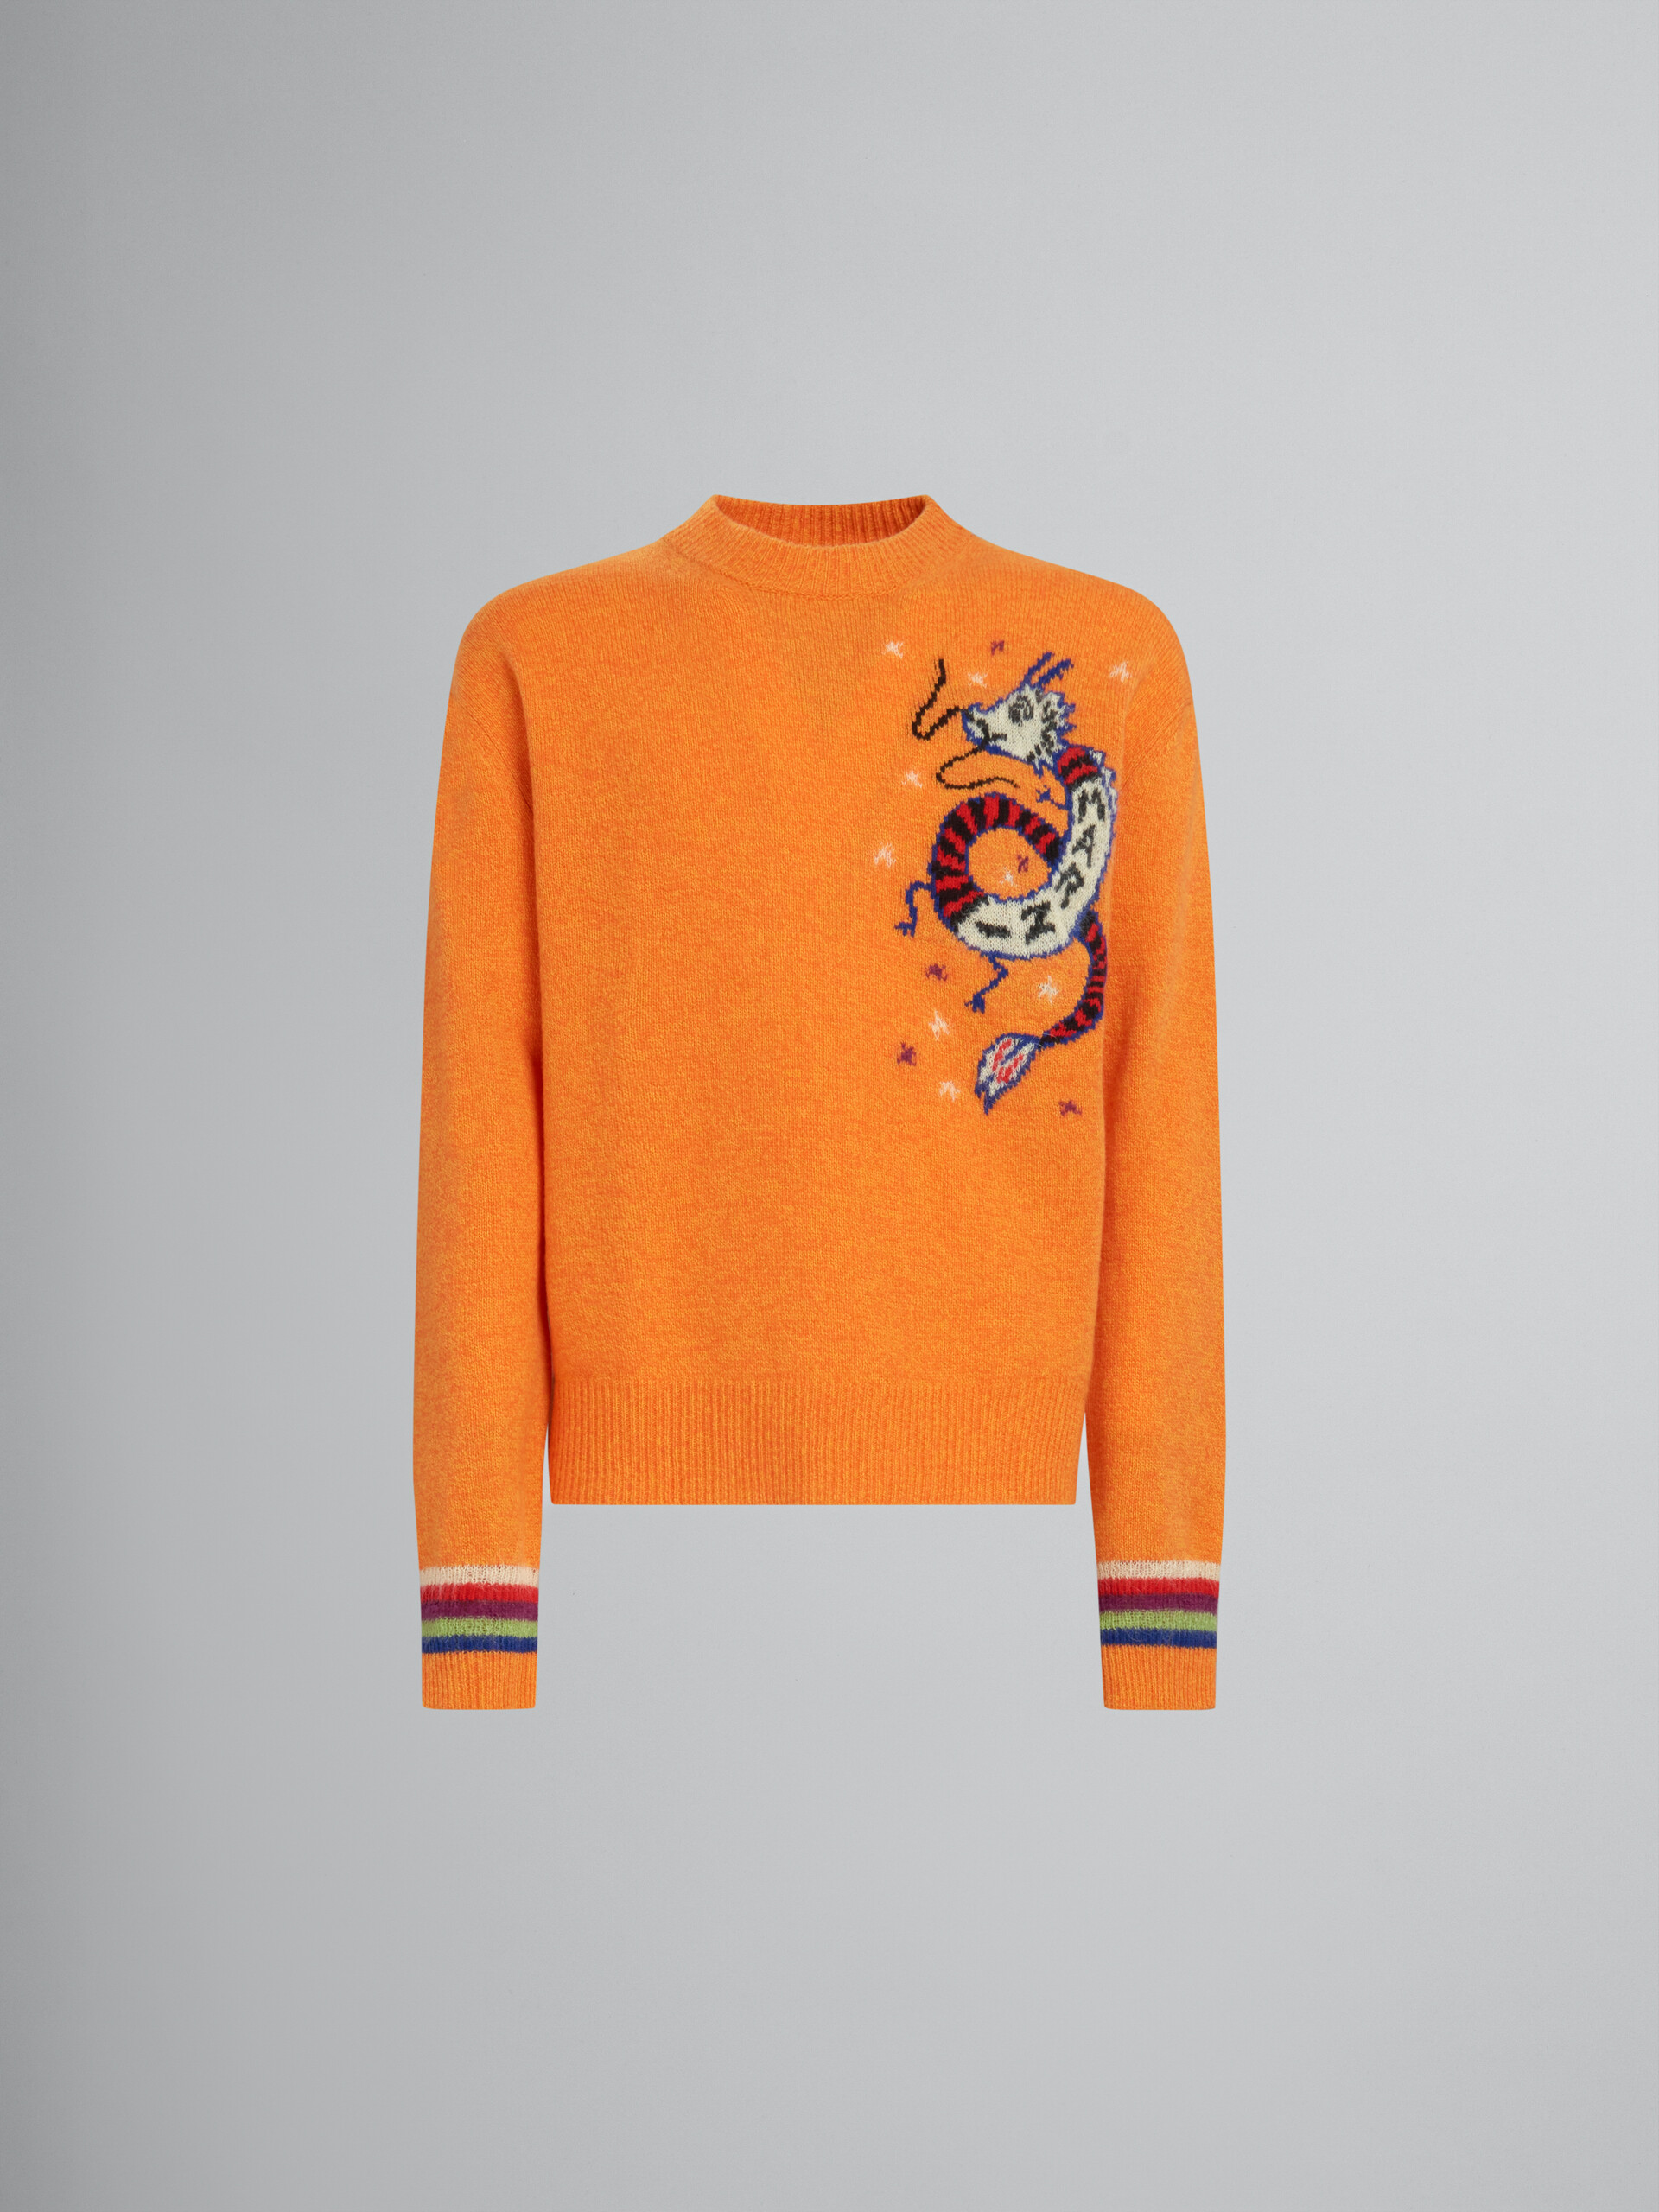 Jersey naranja de lana con dragón de jacquard - jerseys - Image 1